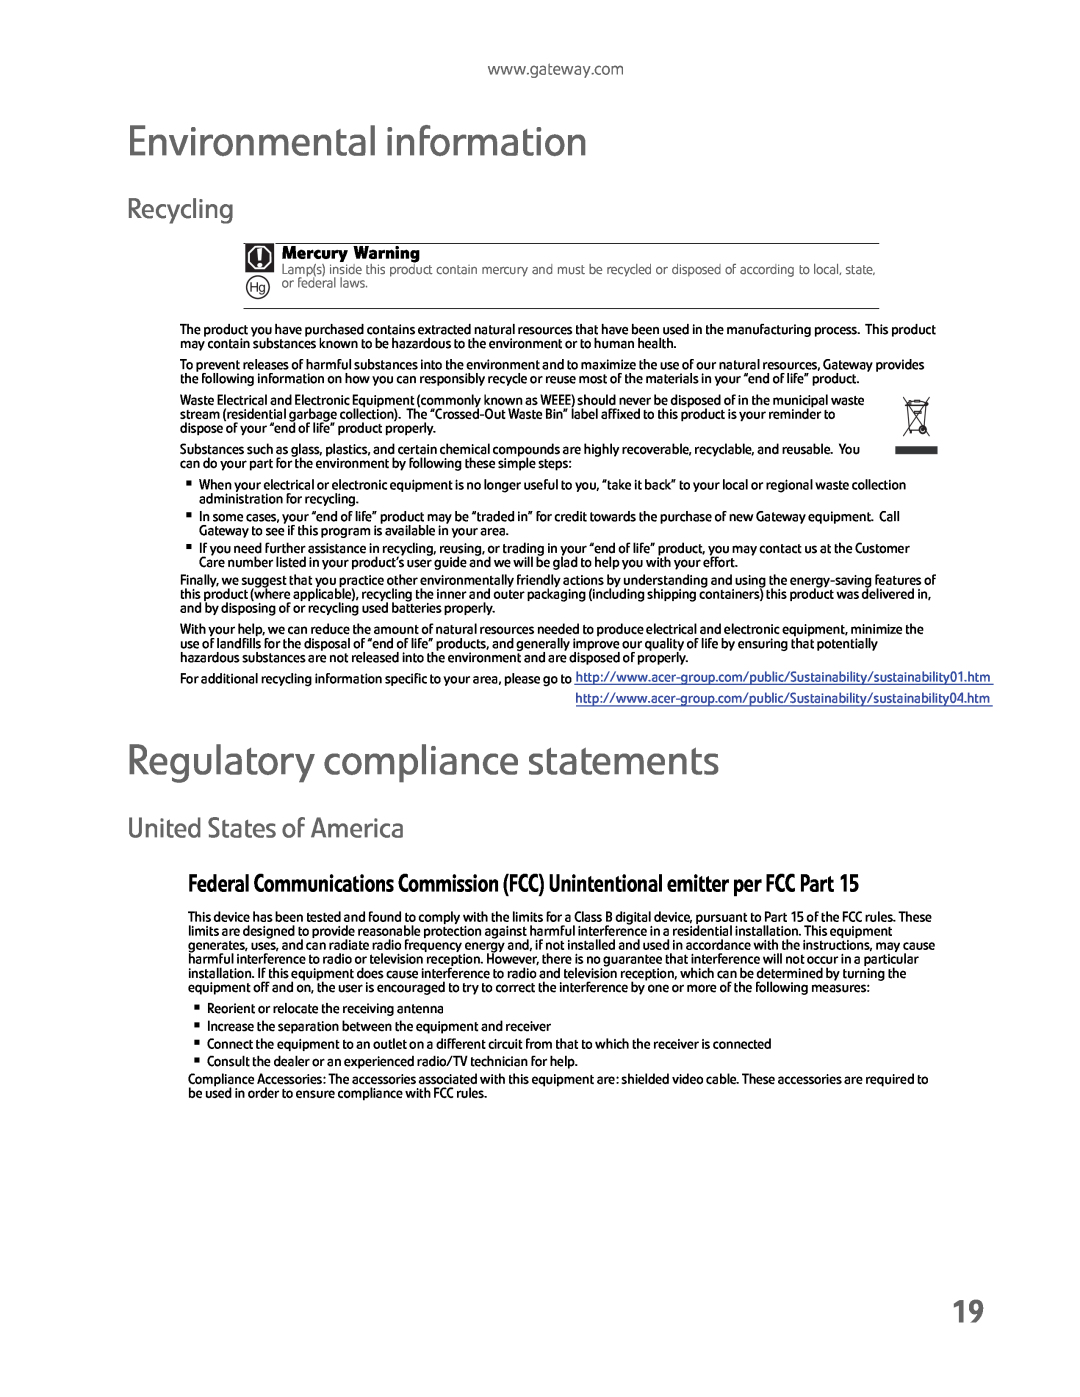 Gateway HX2000 manual Environmental information, Regulatory compliance statements, Recycling, United States of America 